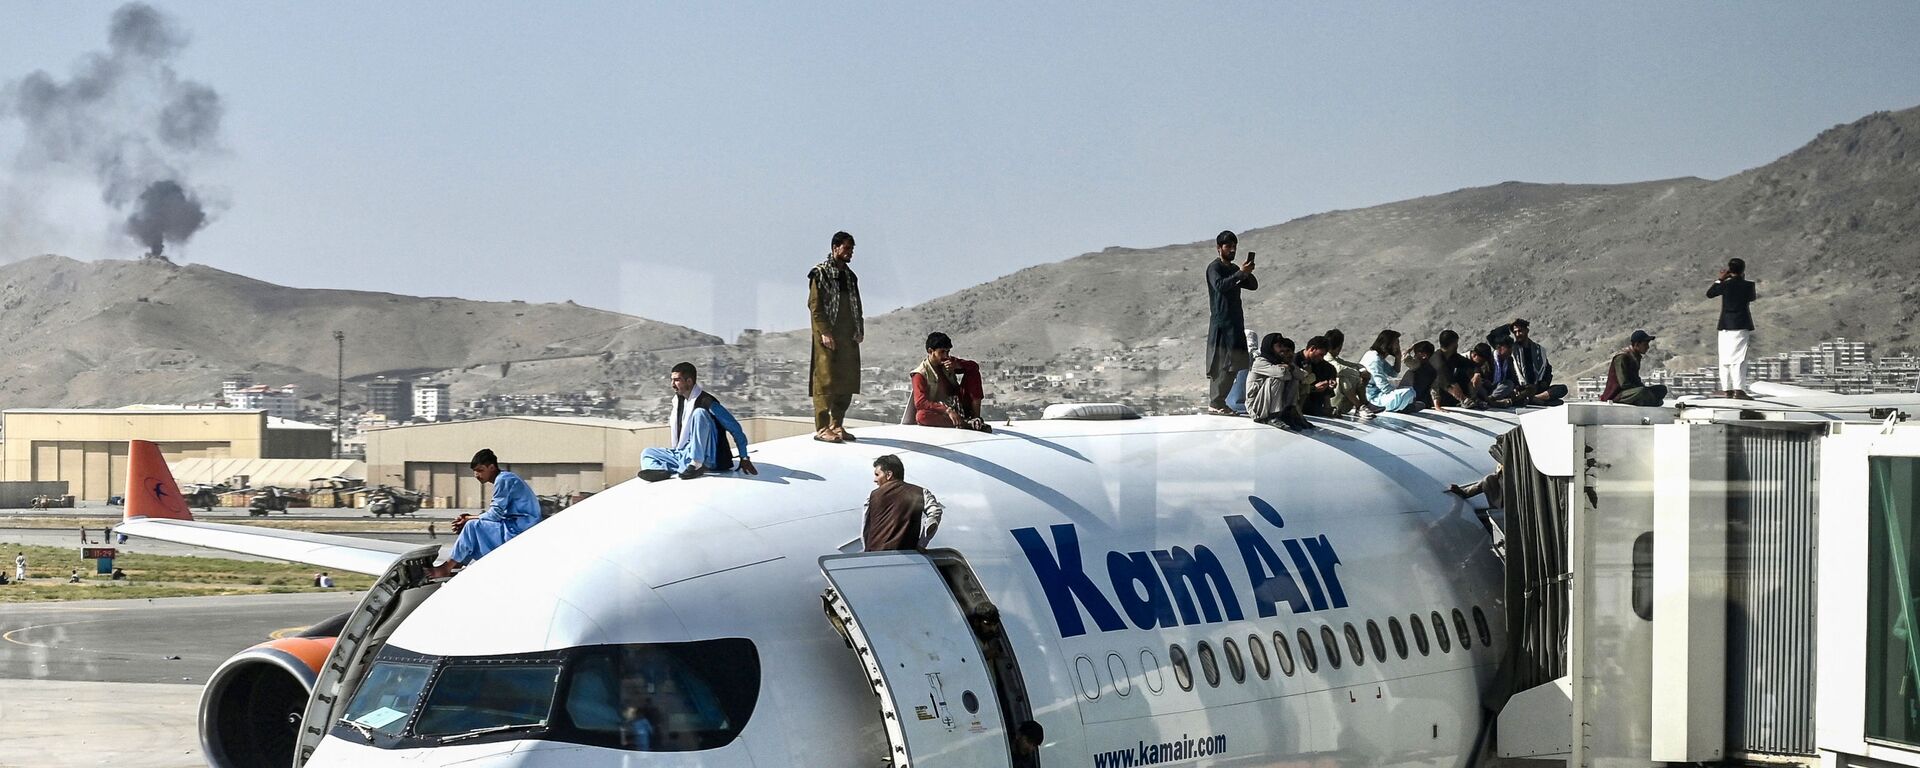 Афганцы на самолете в аэропорту Кабула  - Sputnik Lietuva, 1920, 17.08.2021